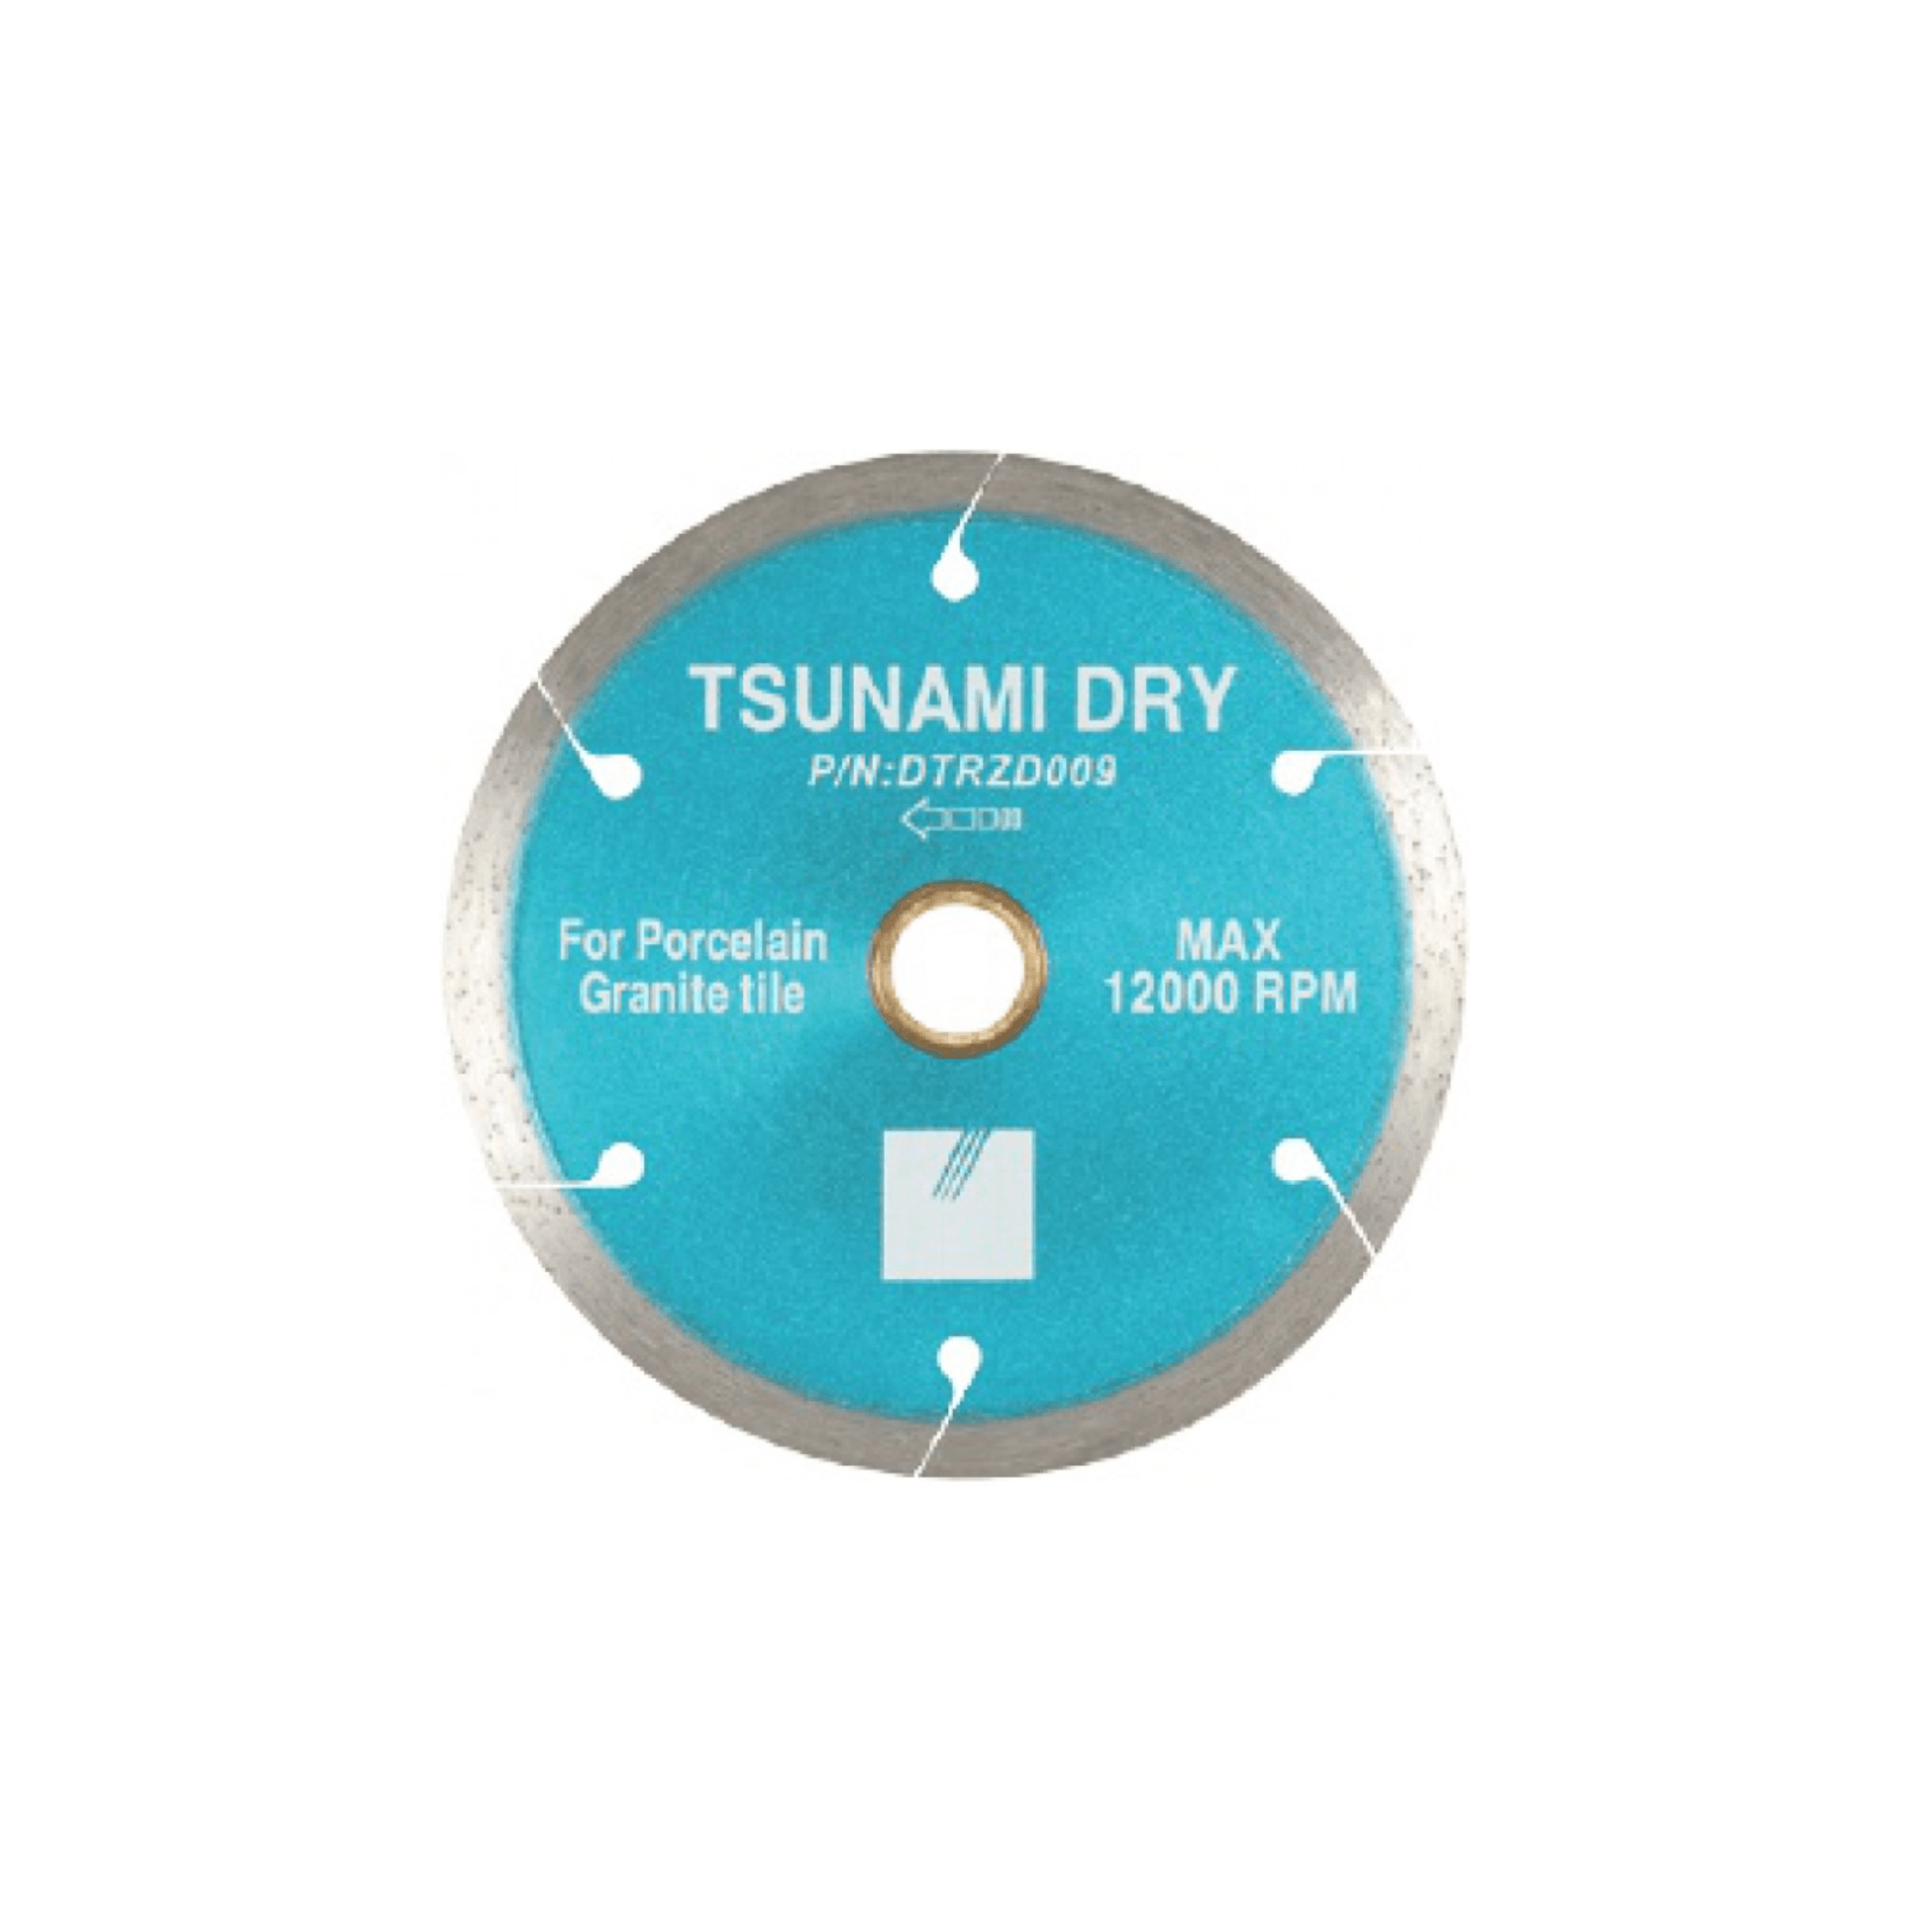 Disco Tsunami Dry 8" - Direct Stone Tool Supply, Inc